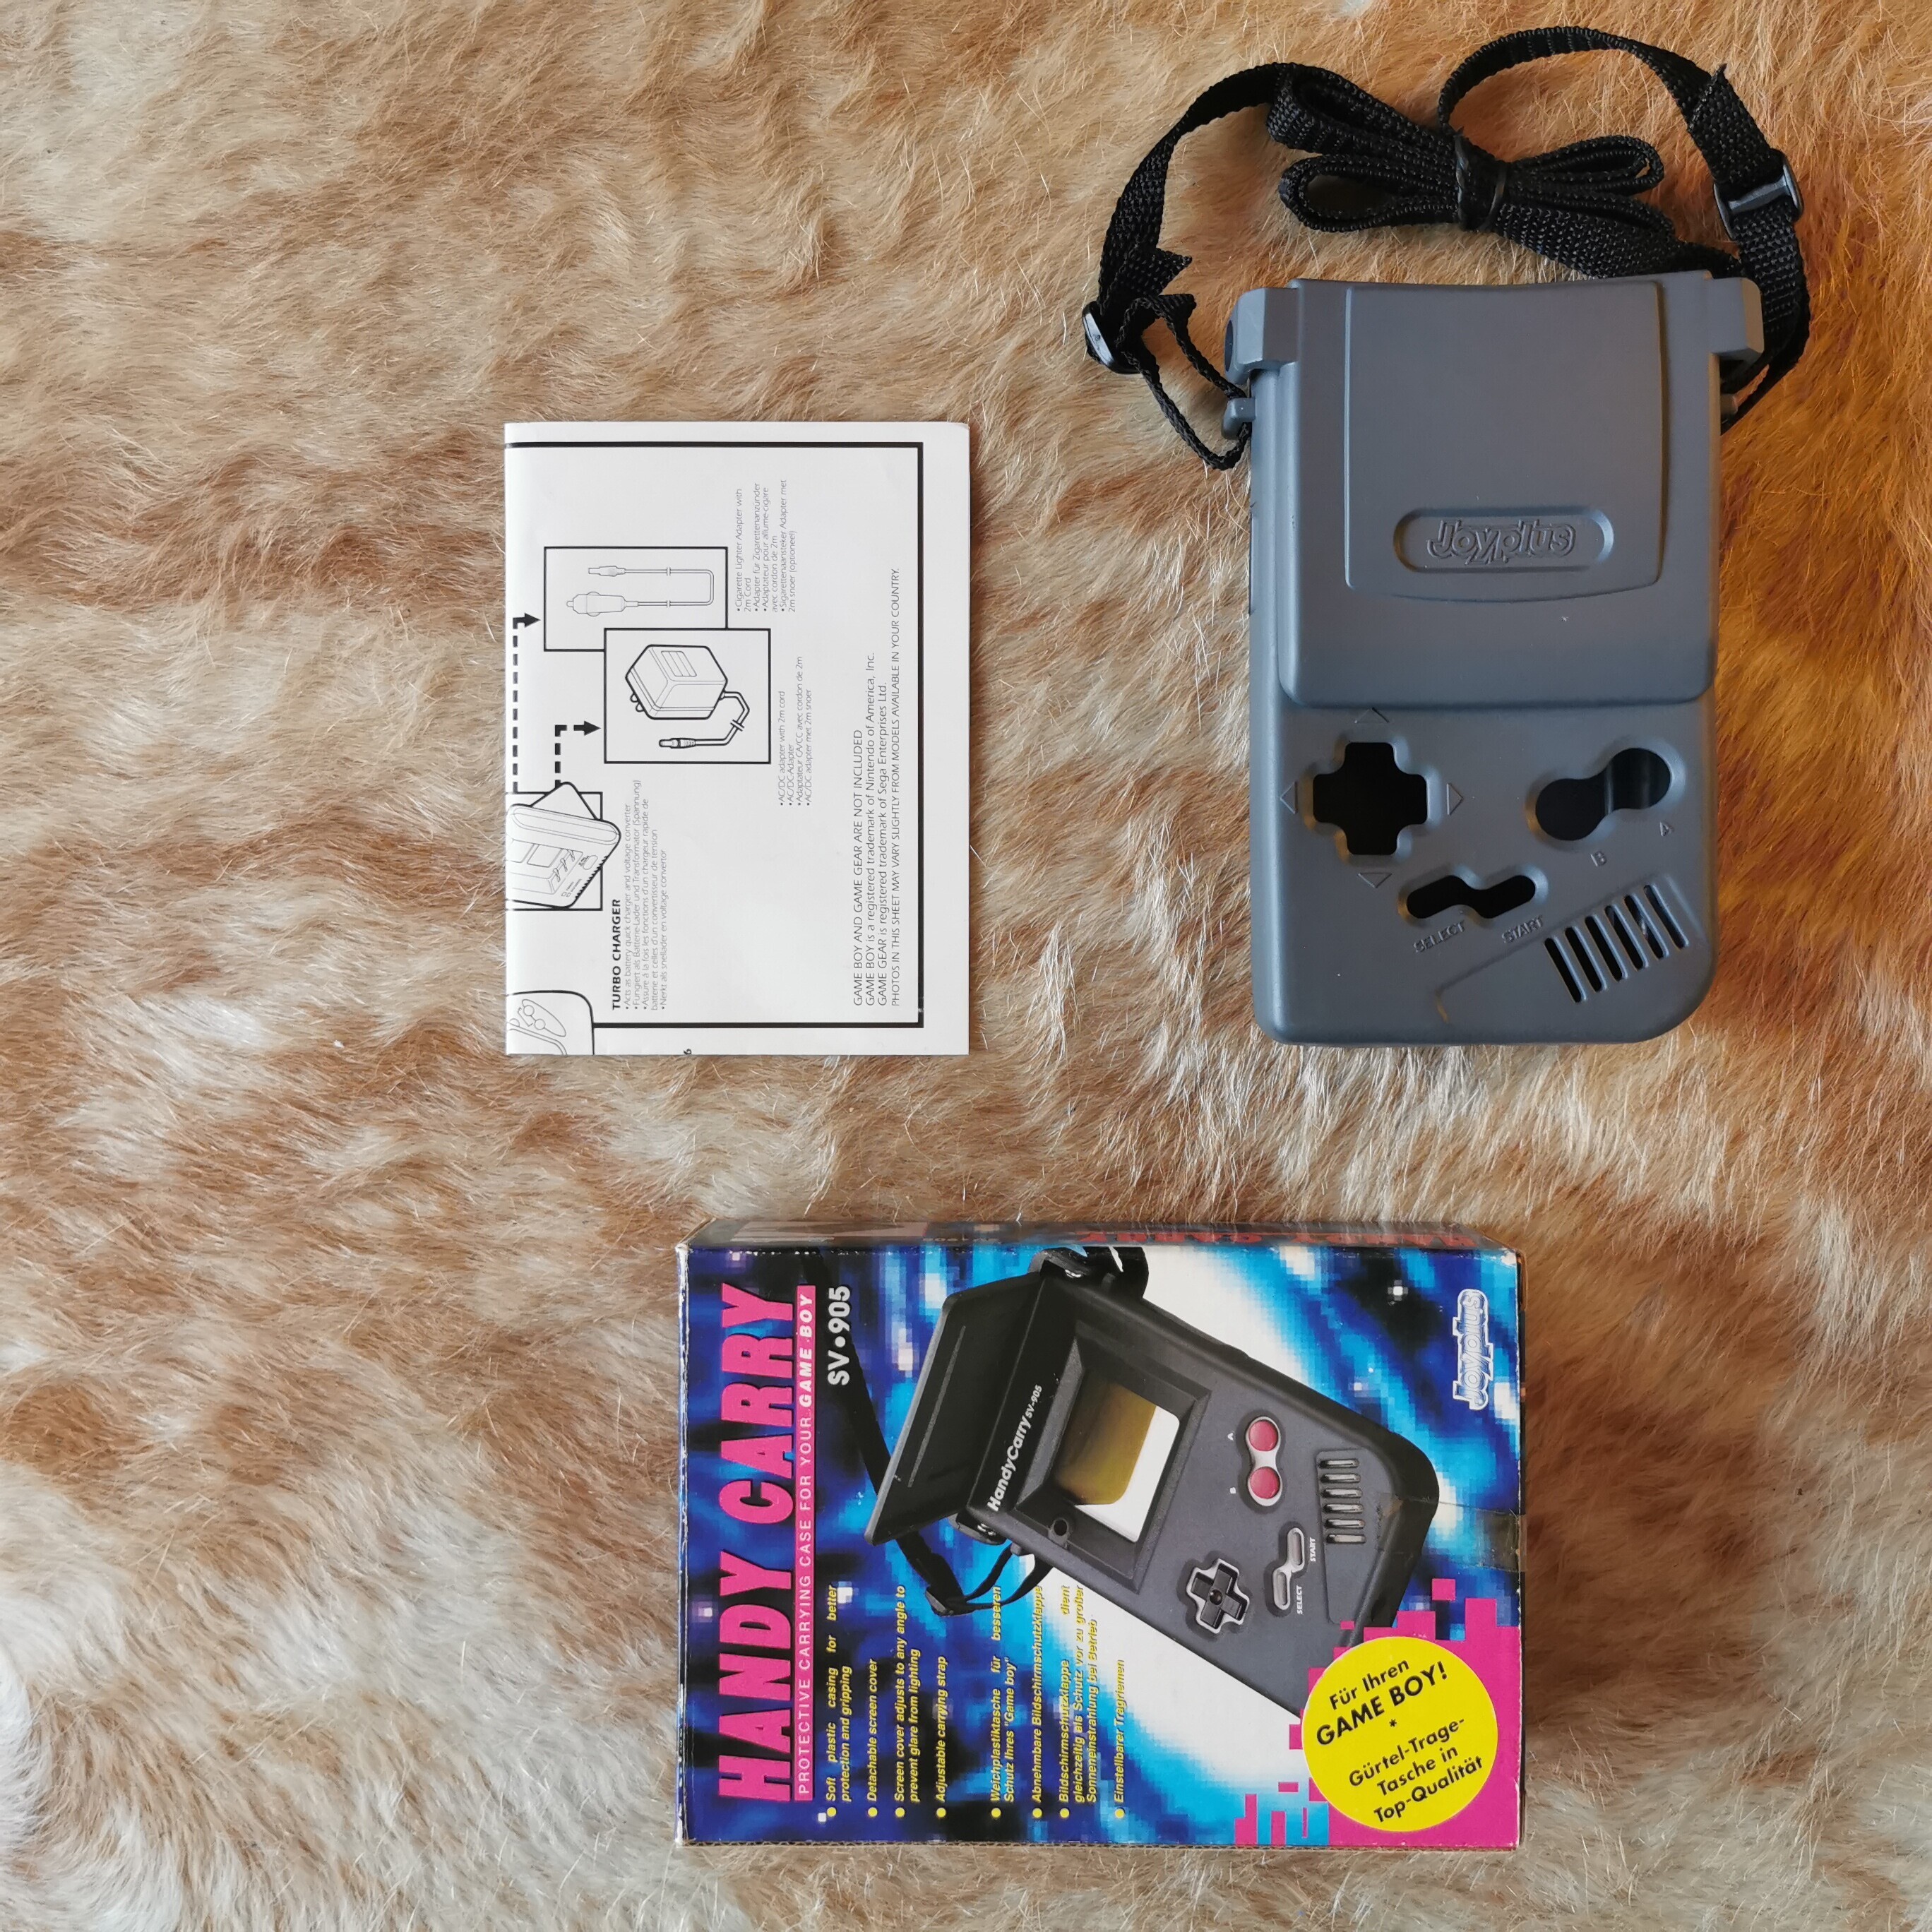  Joyplus Game Boy Handy Carry Case (EU)